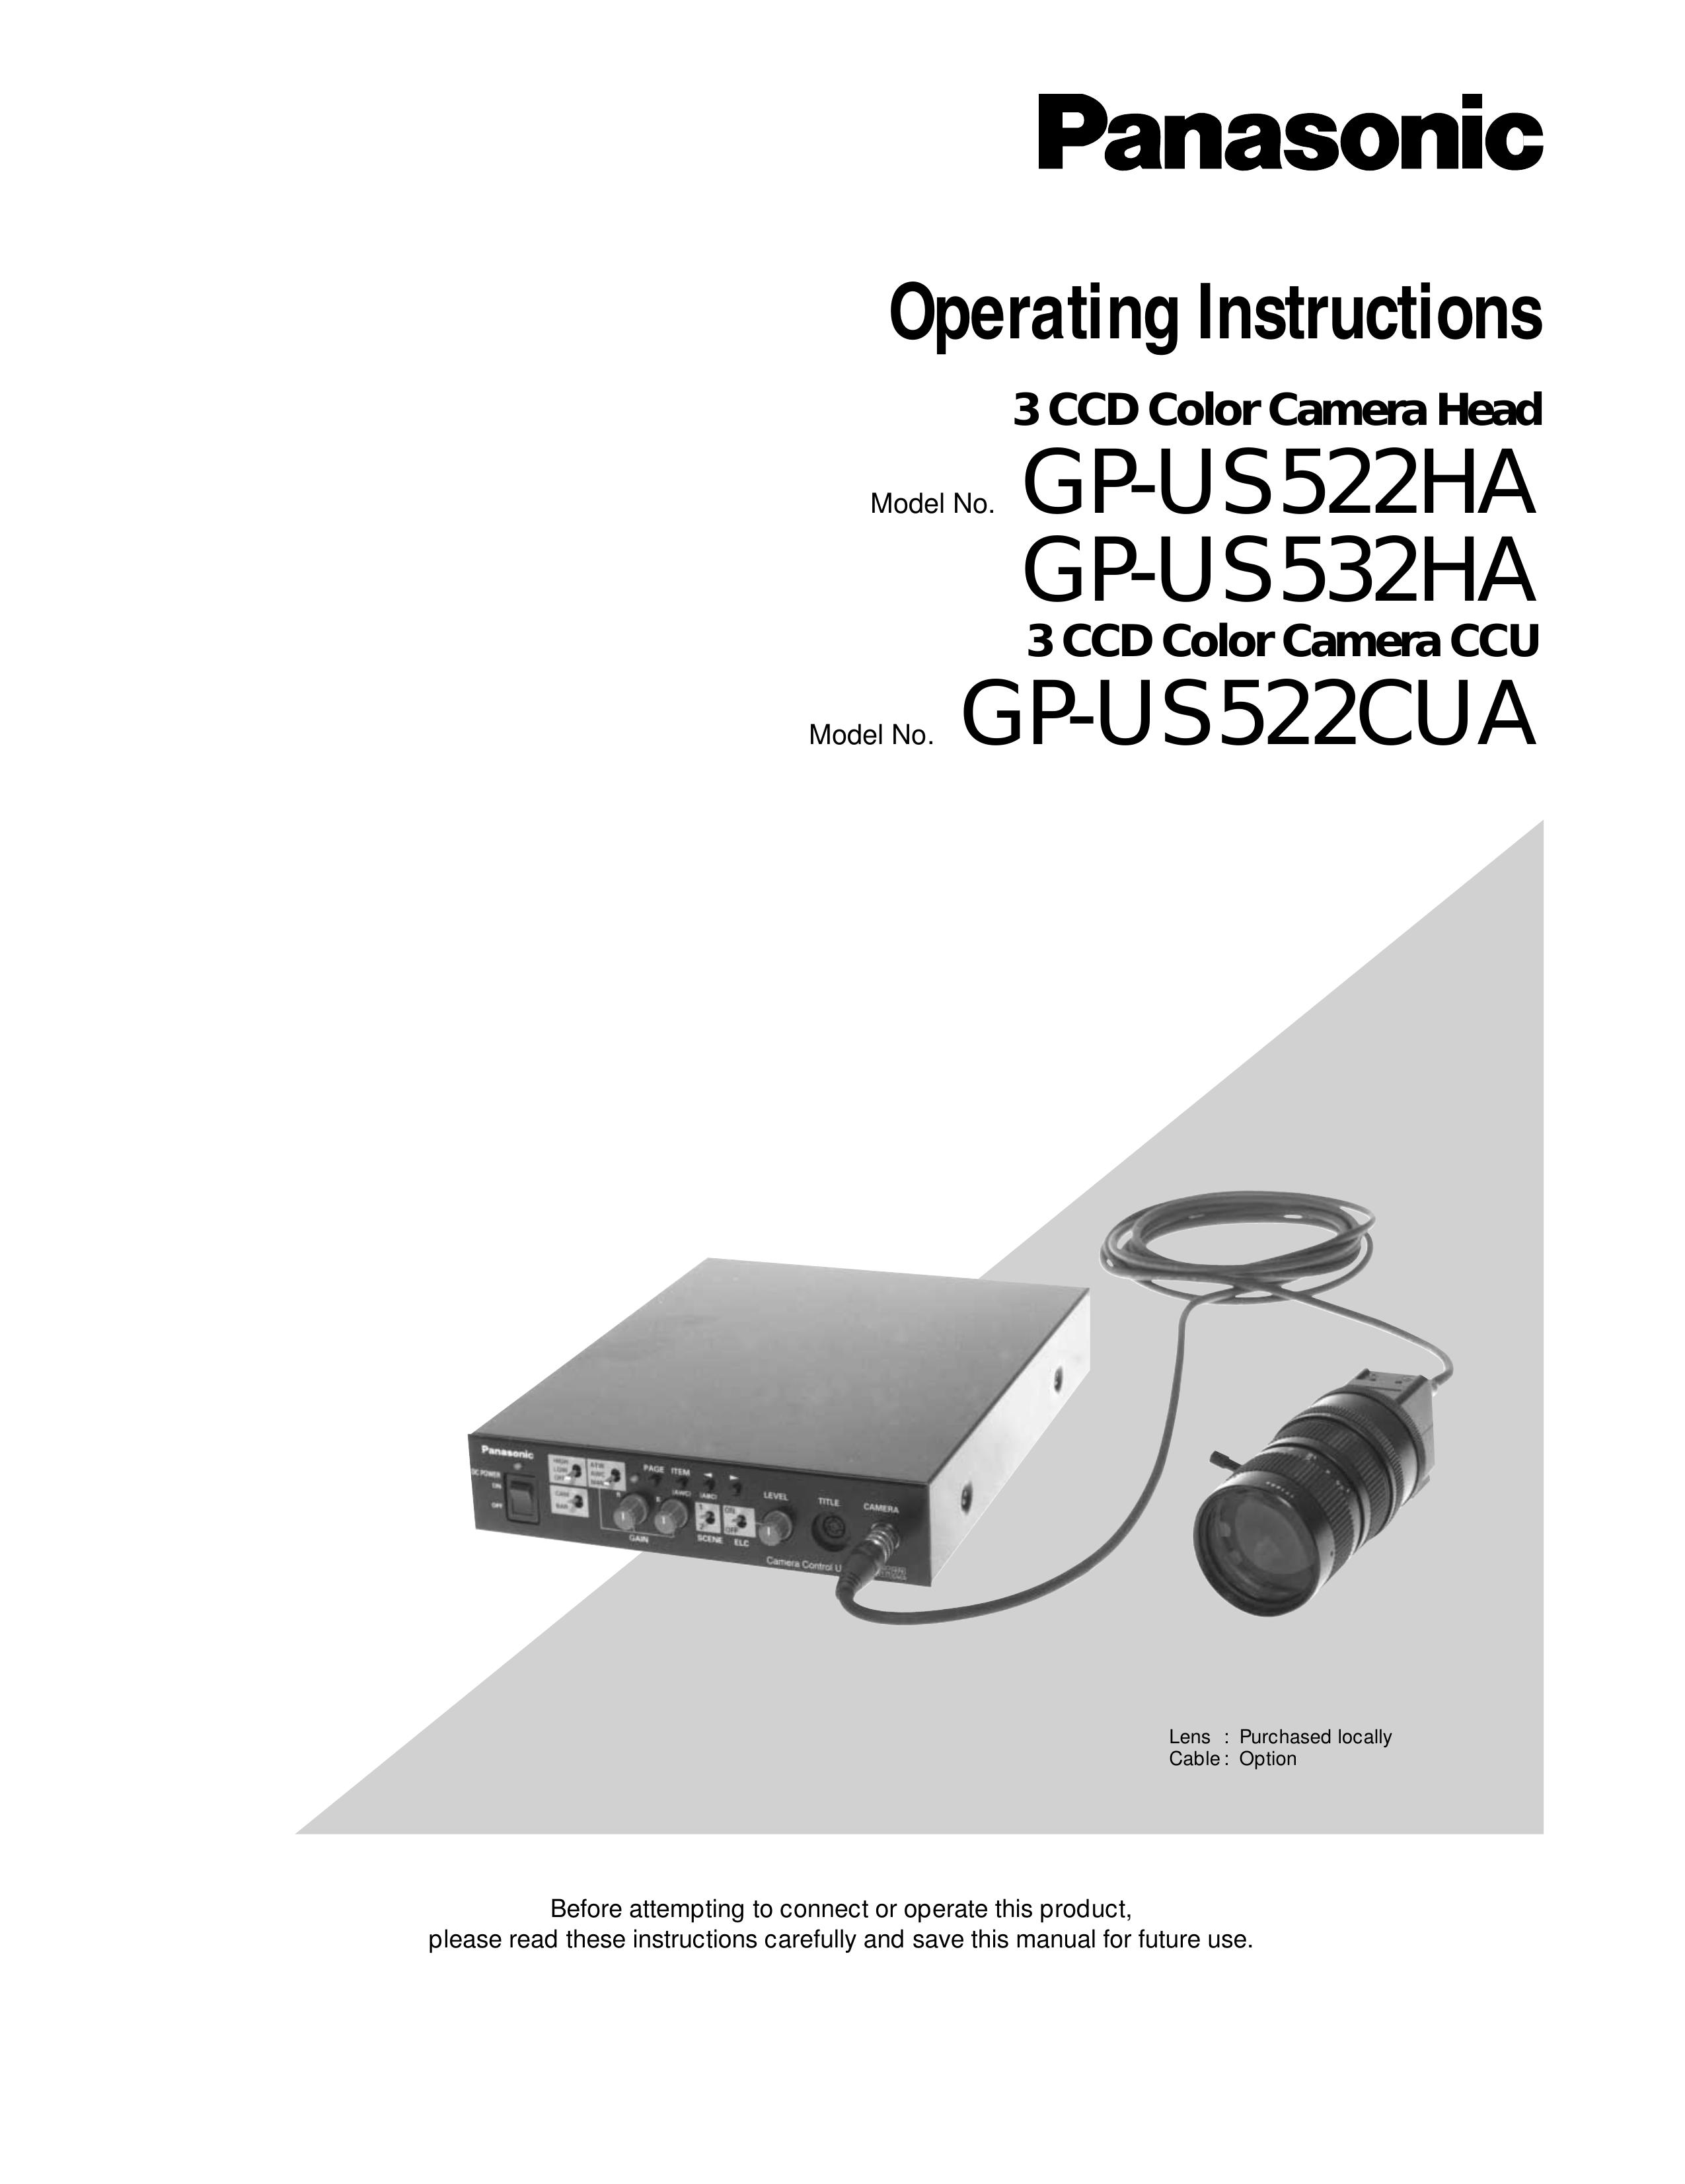 Panasonic GP-US522HA Security Camera User Manual